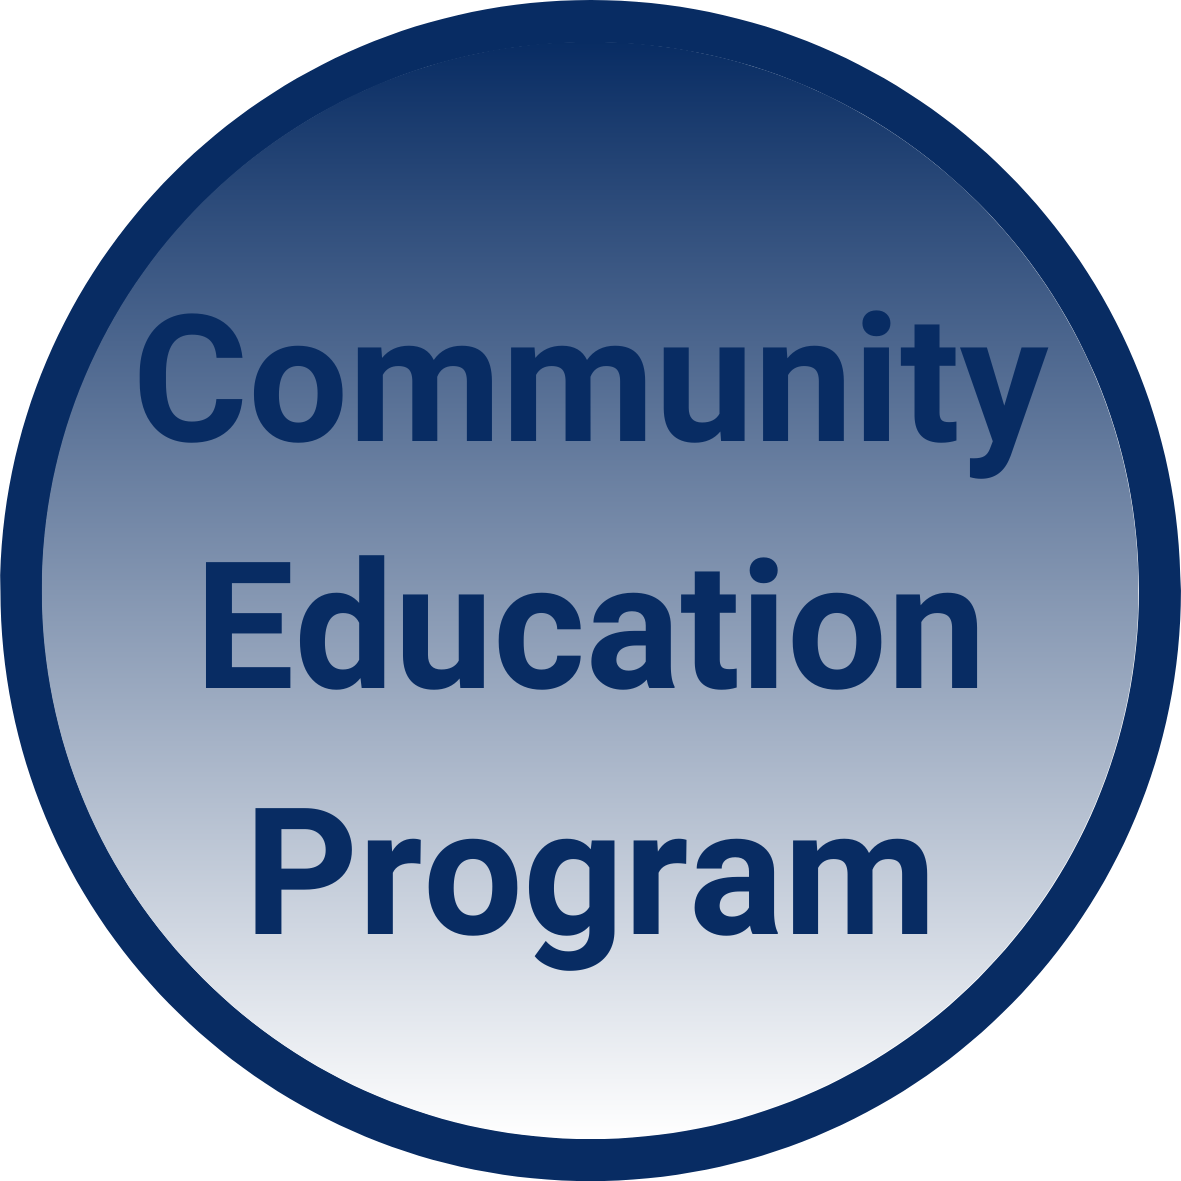 Community Education Program